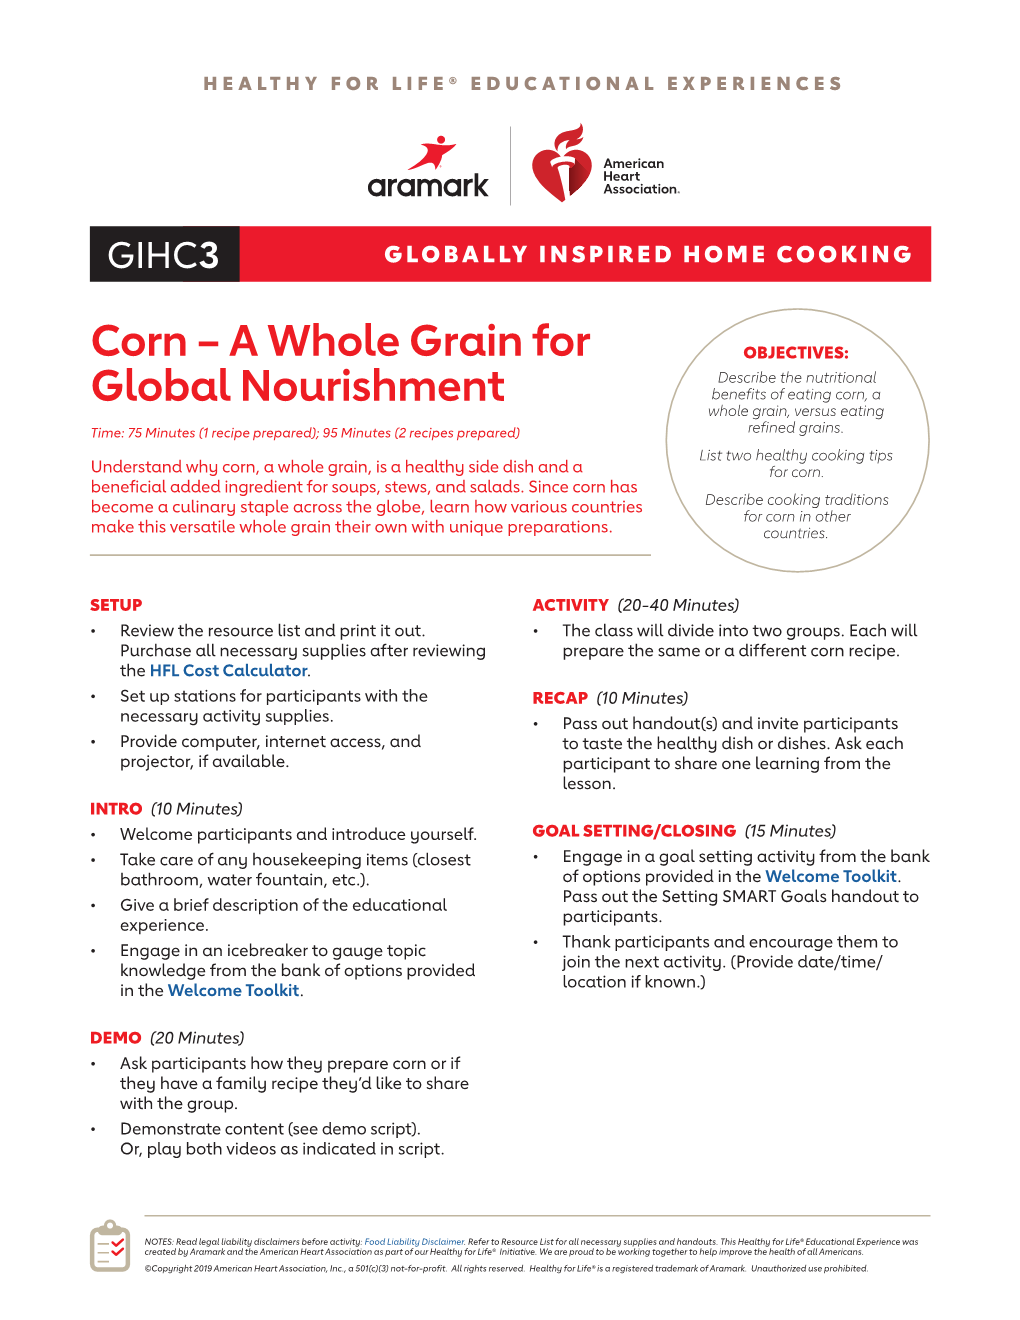 Corn – a Whole Grain for Global Nourishment Resource List